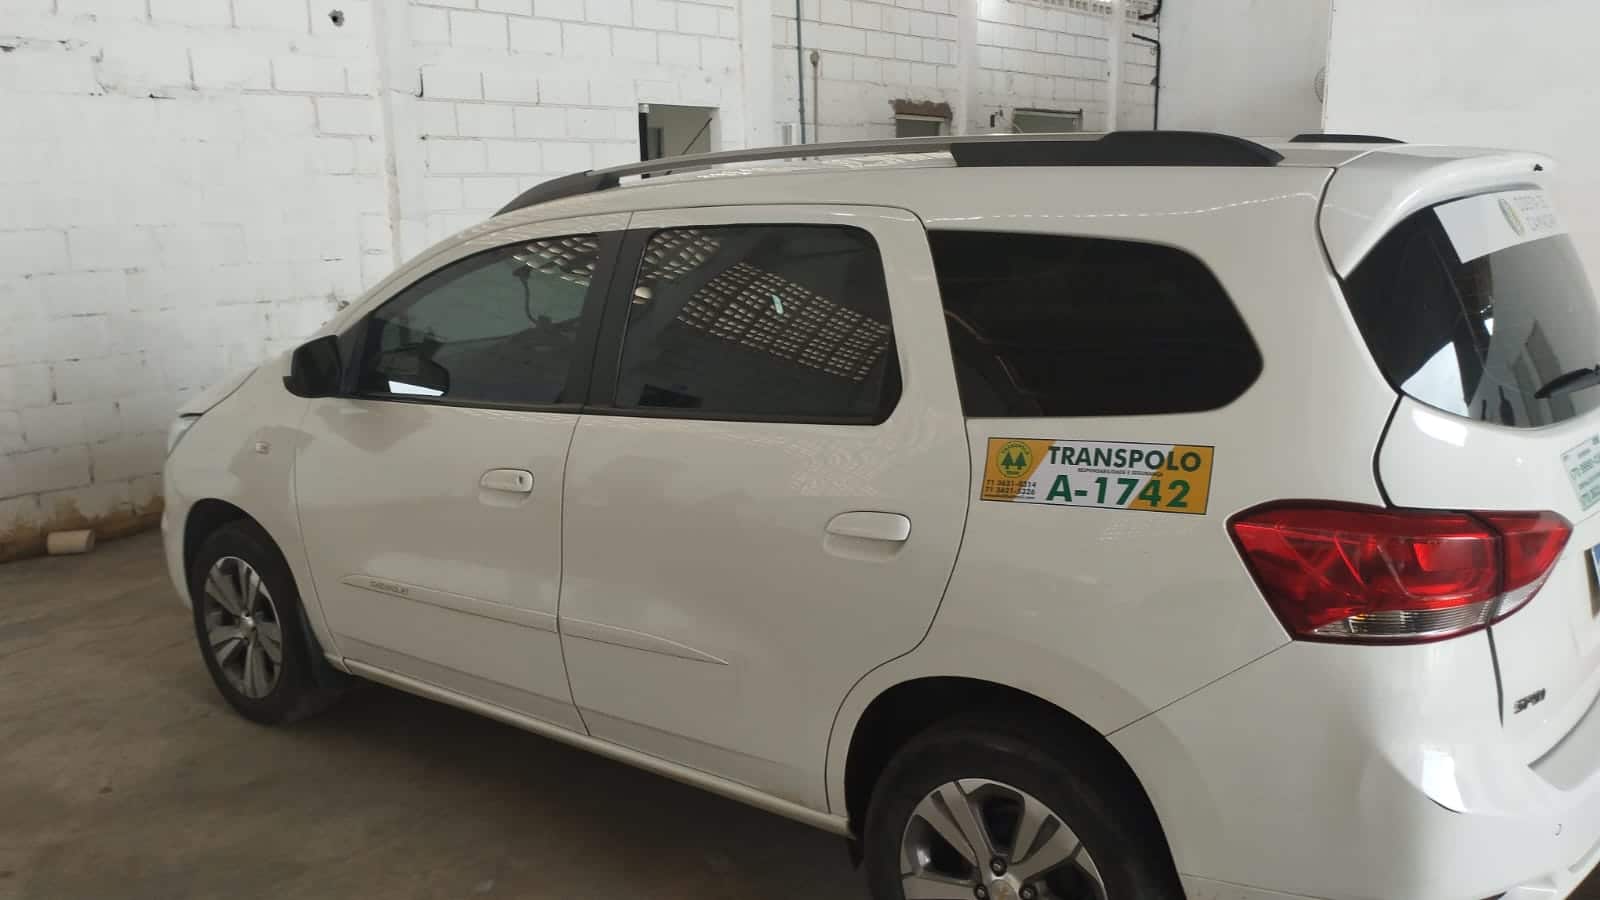 STT regulamenta táxis brancos para operar em Camaçari